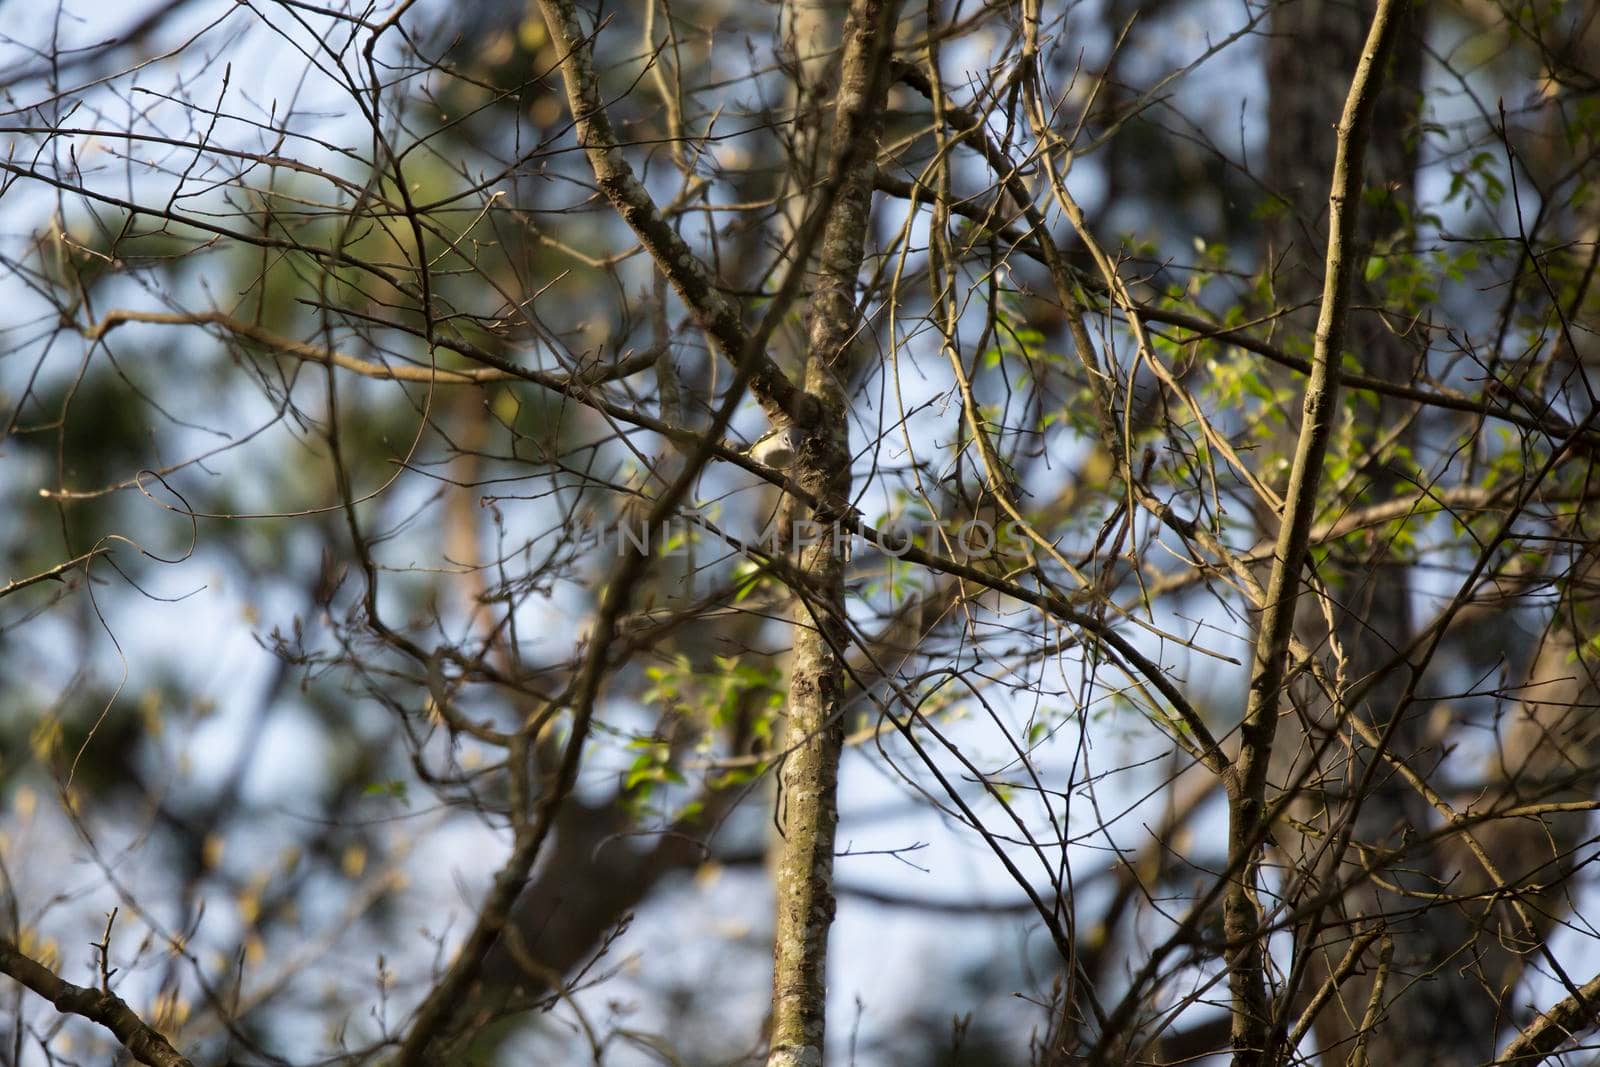 Blue-headed vireo (Vireo solitarius) bird foraging on a tree limb